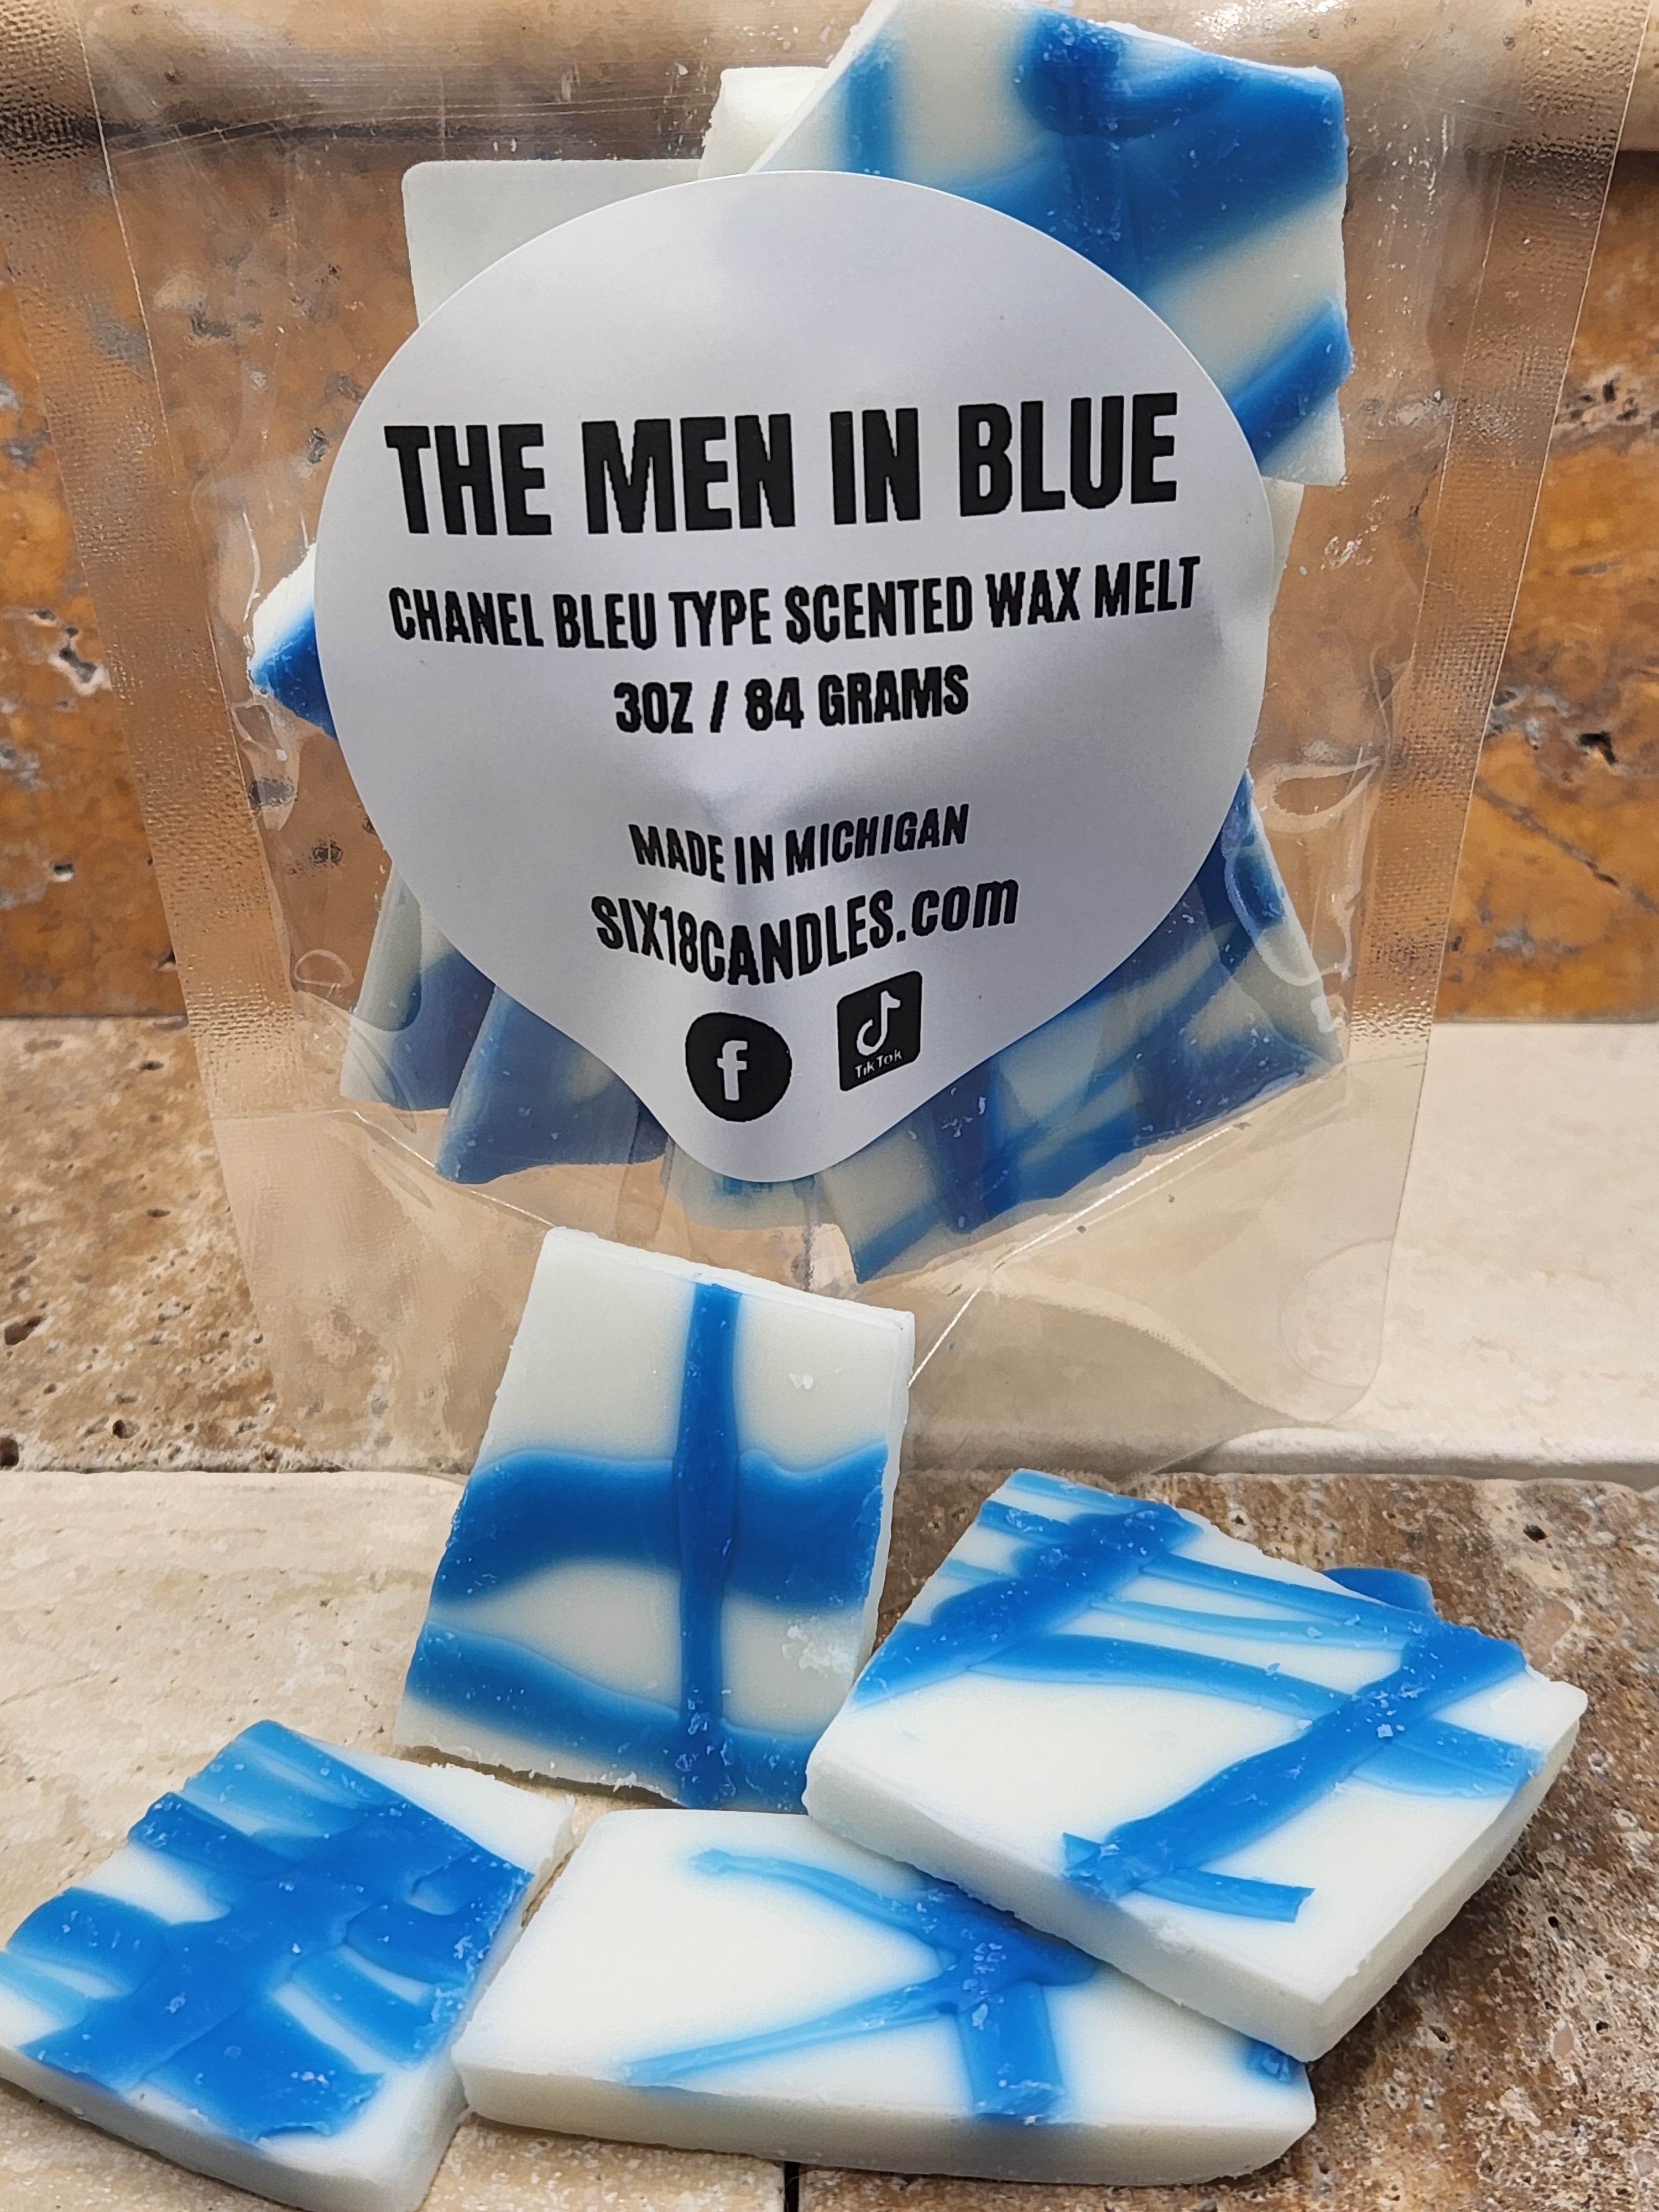 chanel bleu soap